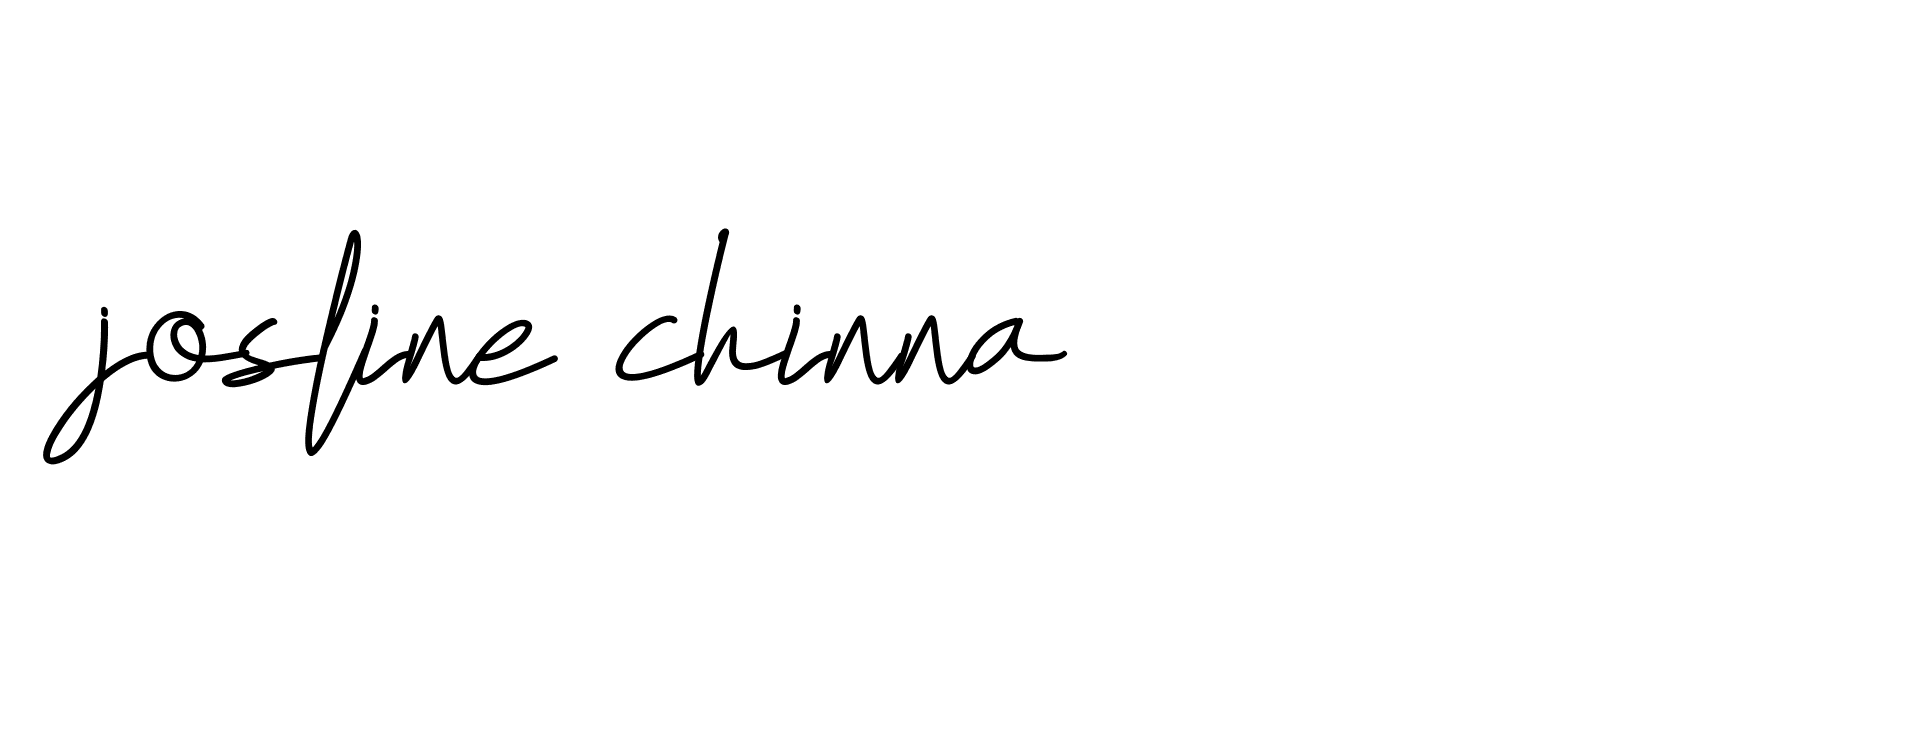 88+ Josline-chinna Name Signature Style Ideas | Amazing Autograph